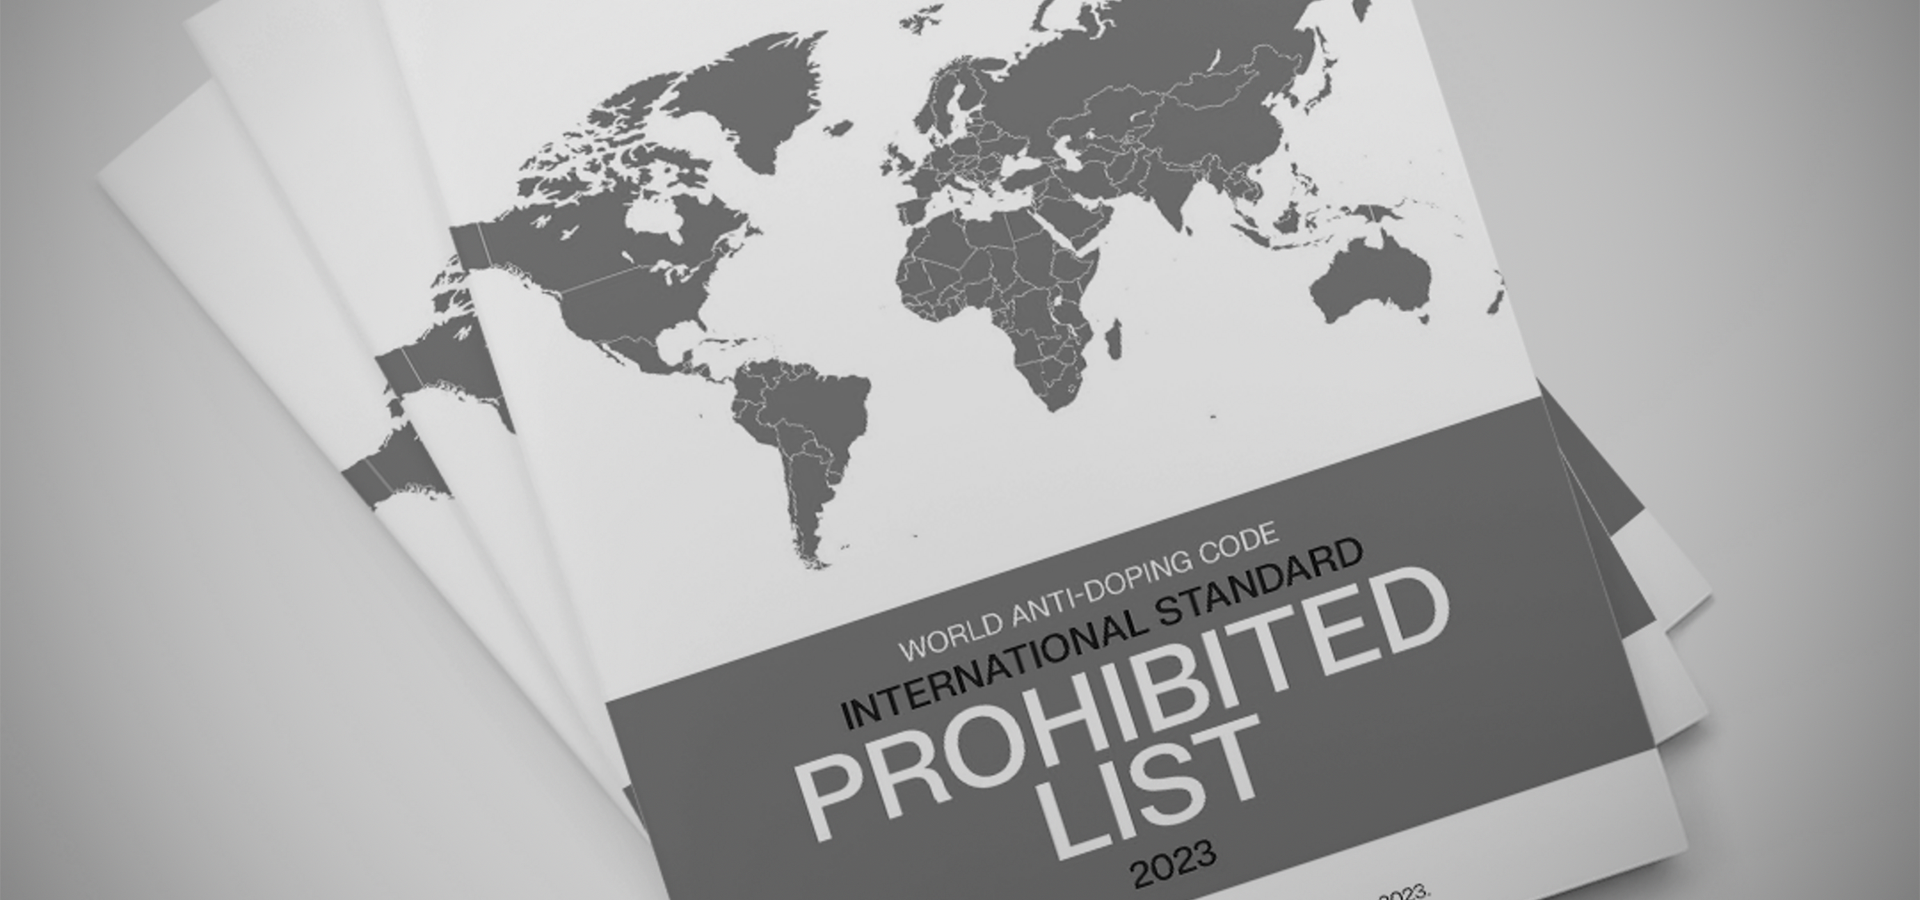 International Standard for the Prohibited List